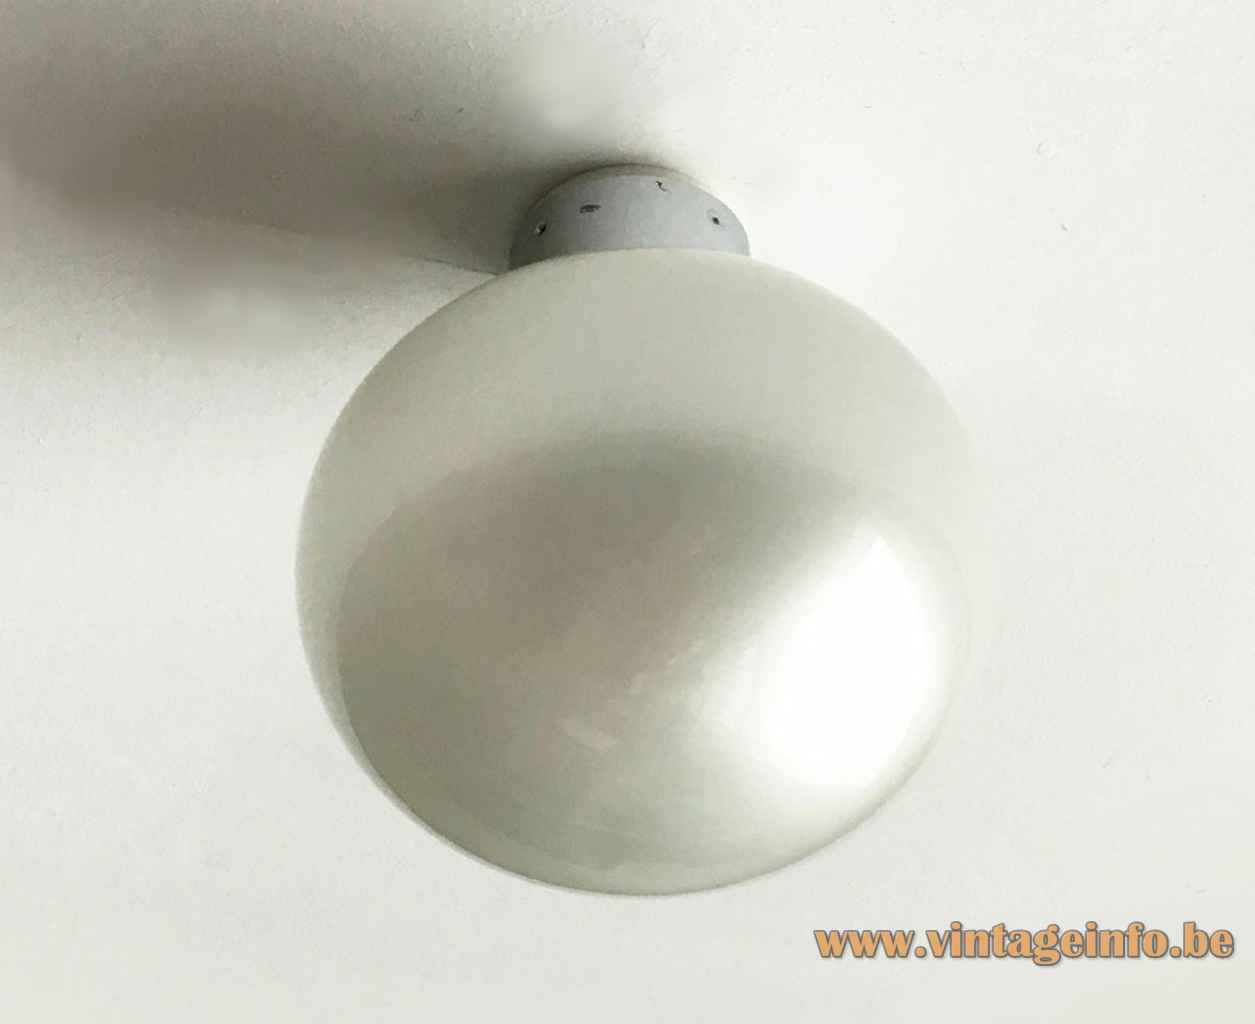 Motoko Ishii globe flush mount Staff iridescent pearl coated glass sphere lampshade 1970s Germany E27 socket